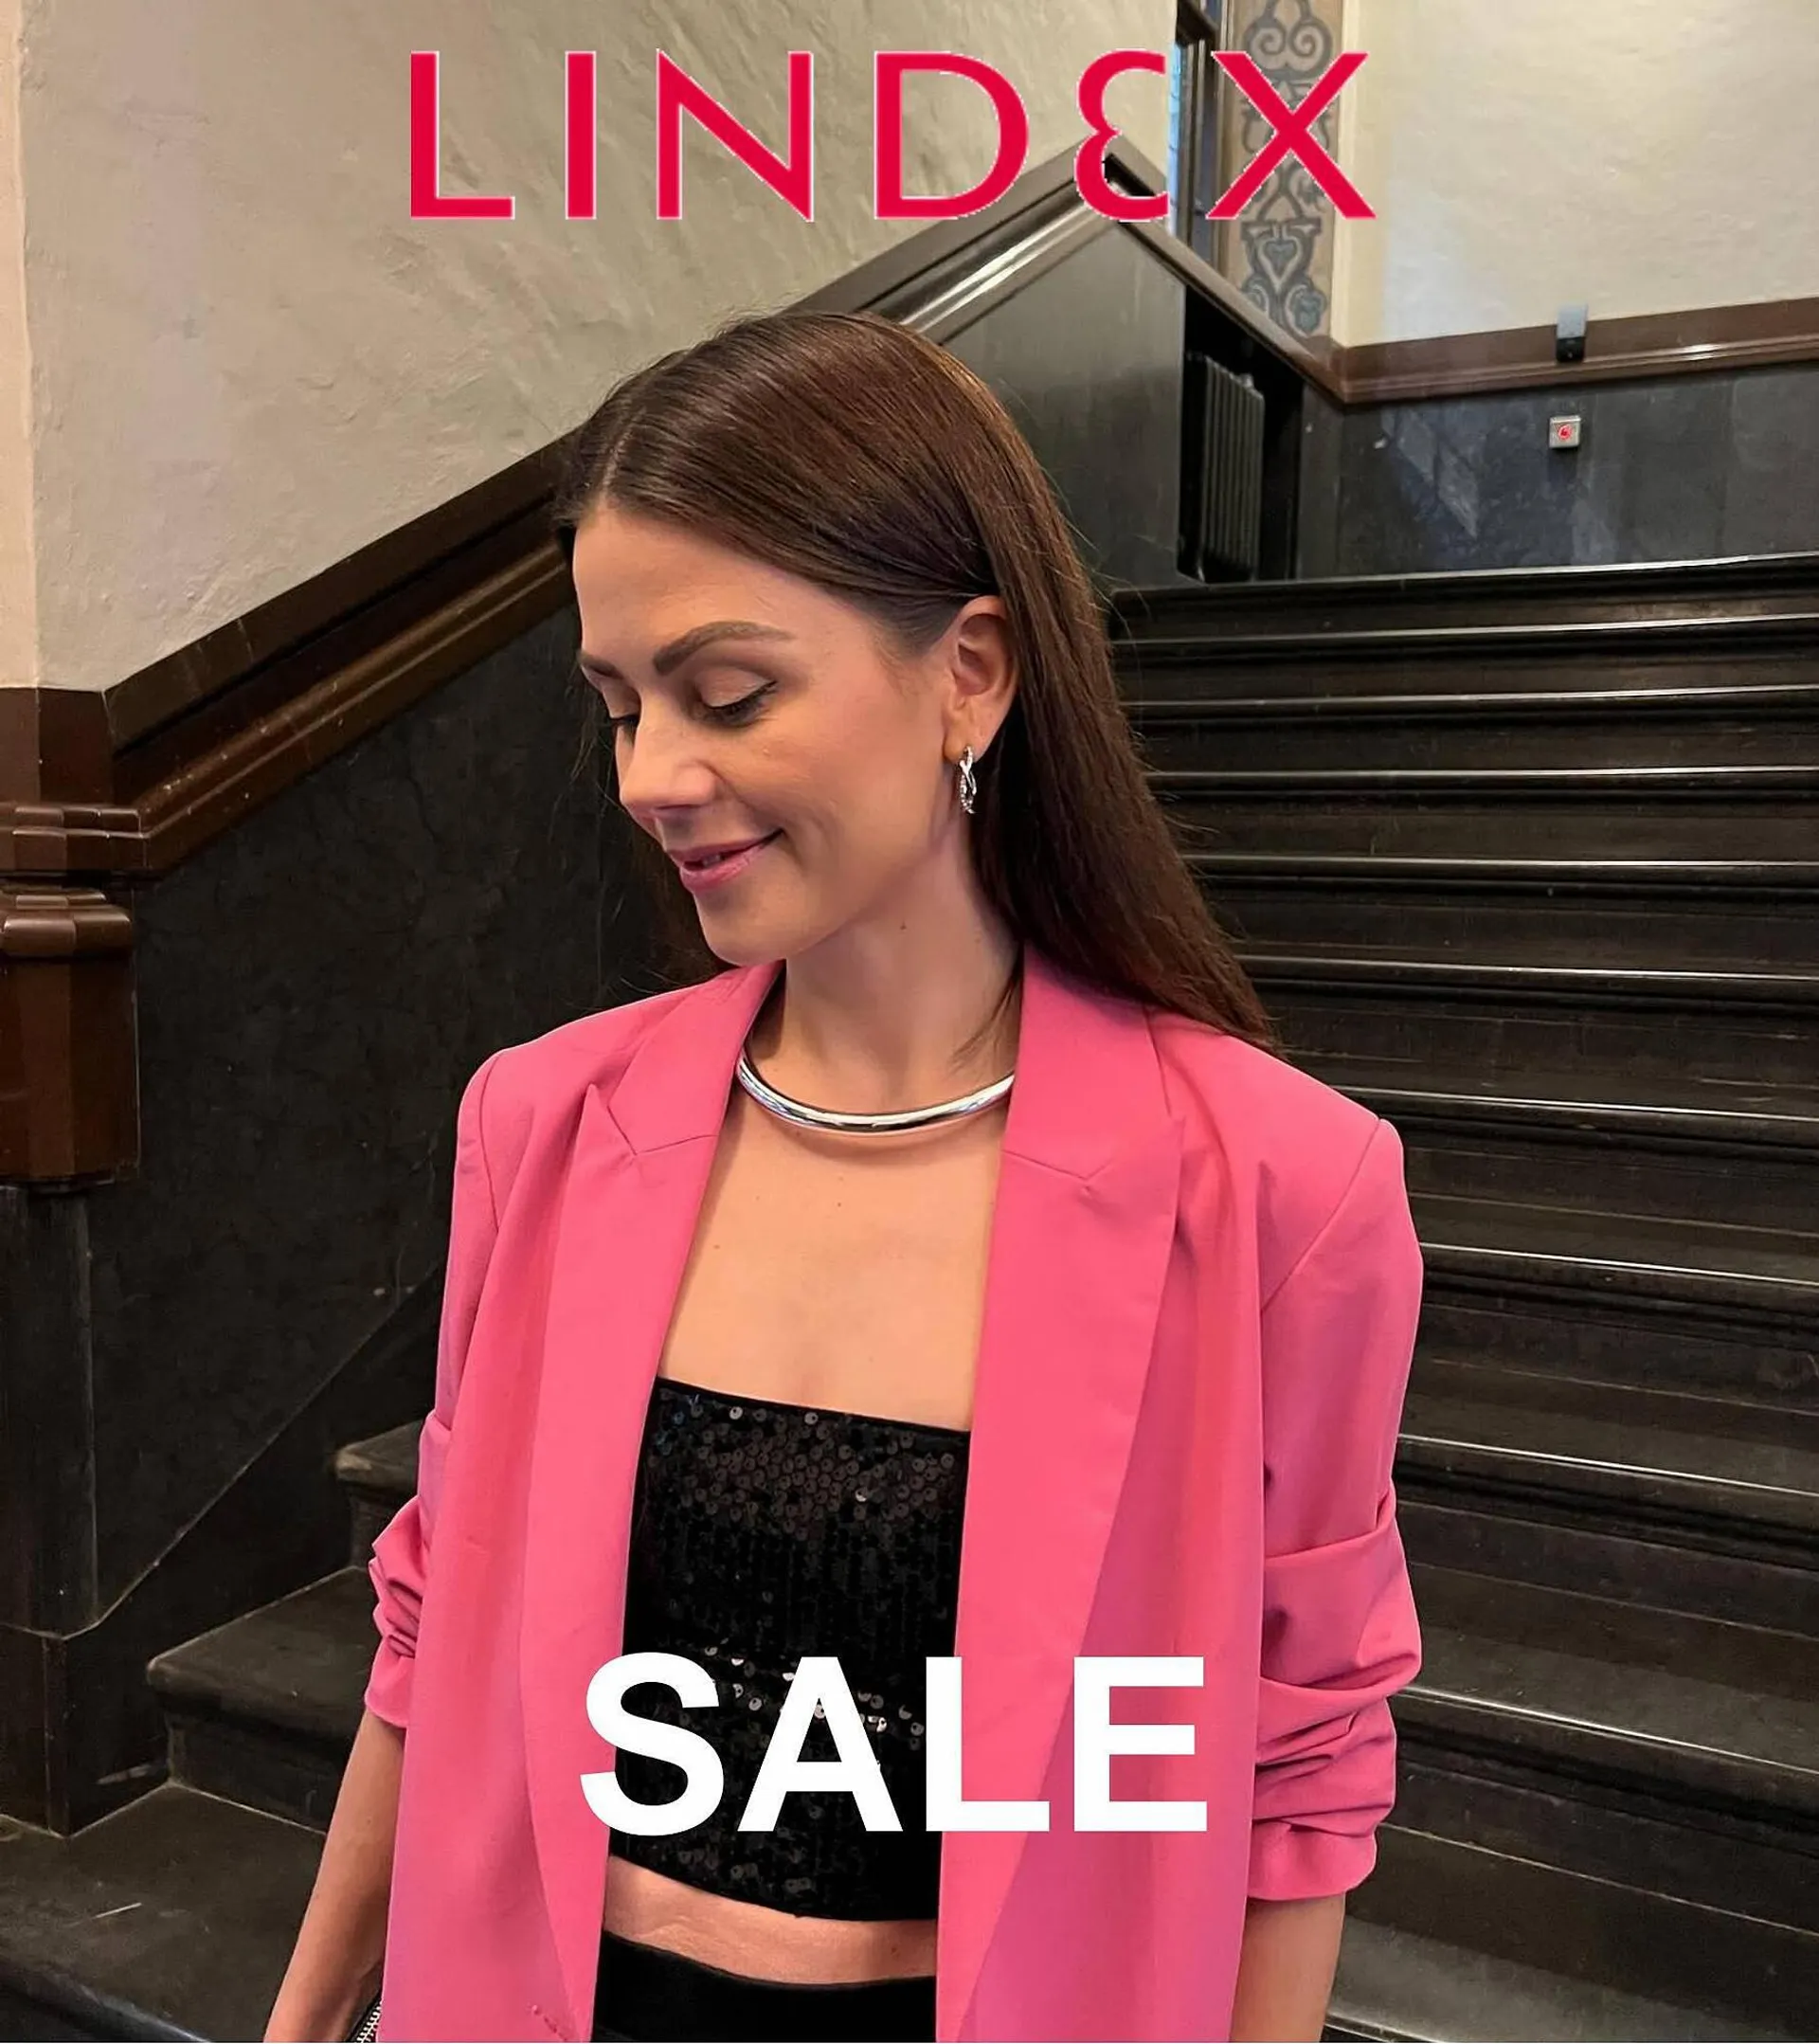 Lindex reklamblad - 1